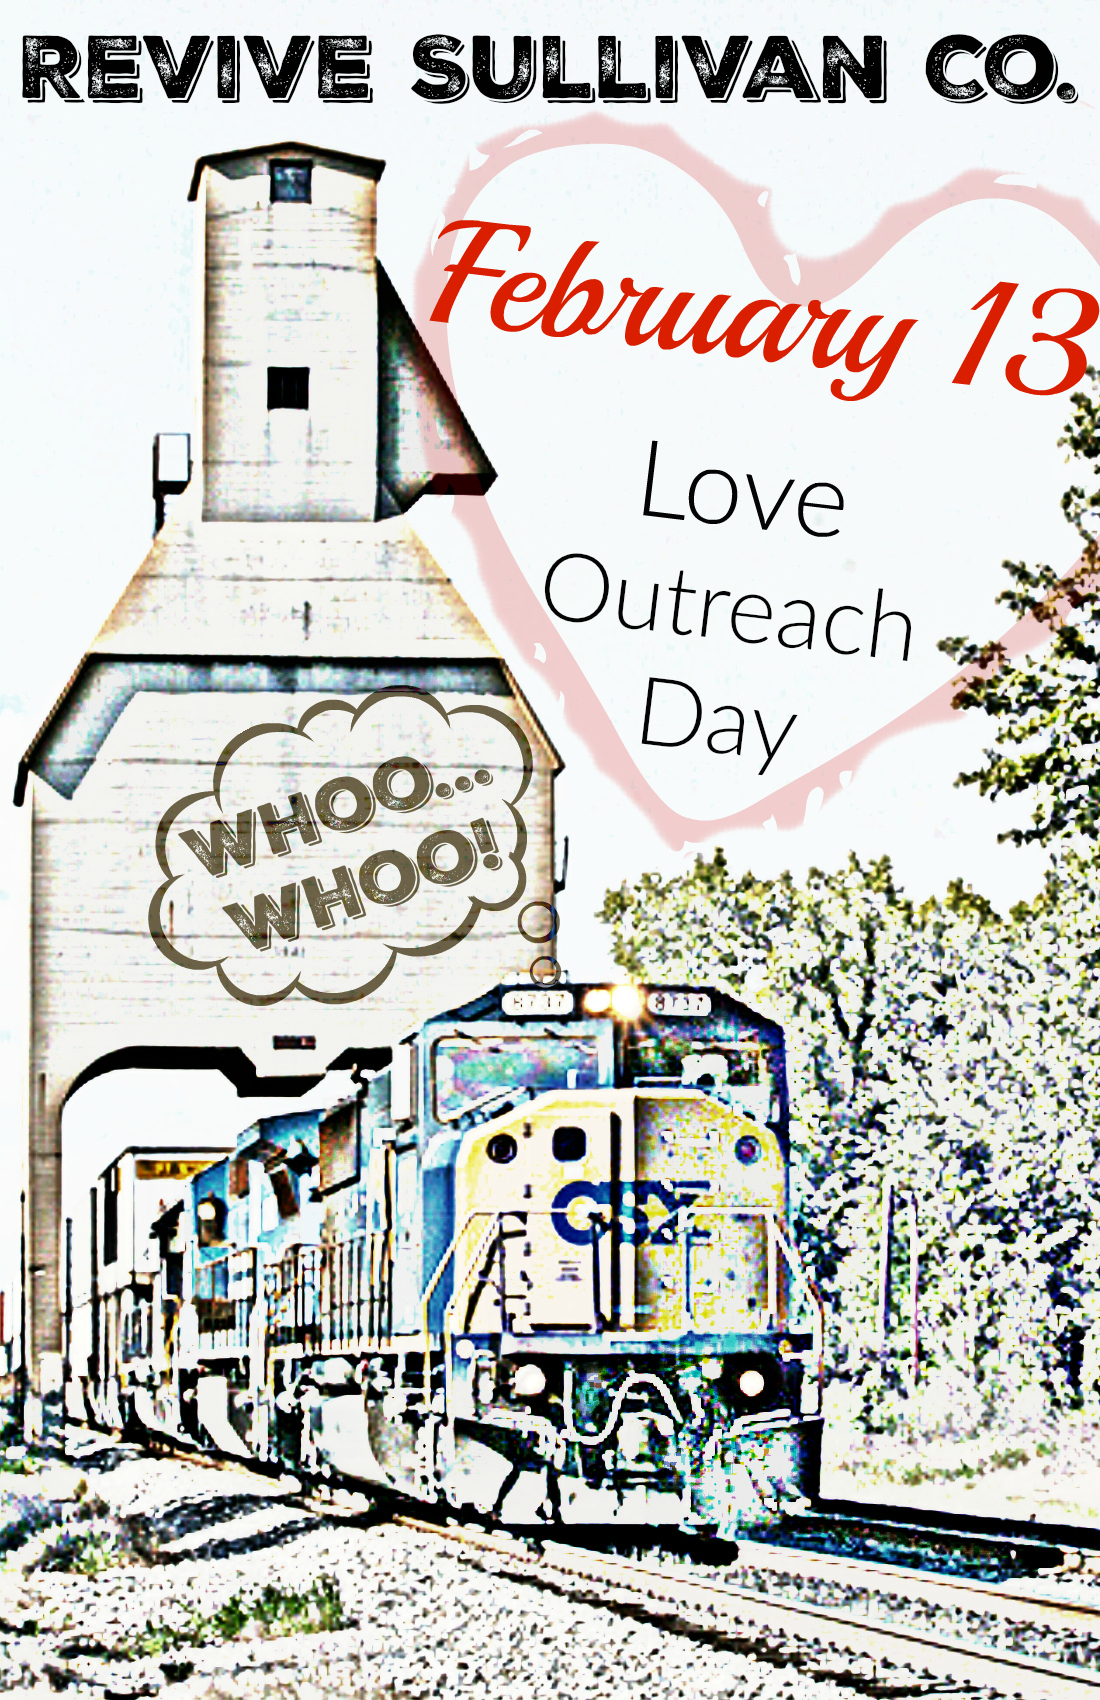 Sullivan Co. Feb 13 Love Outreach